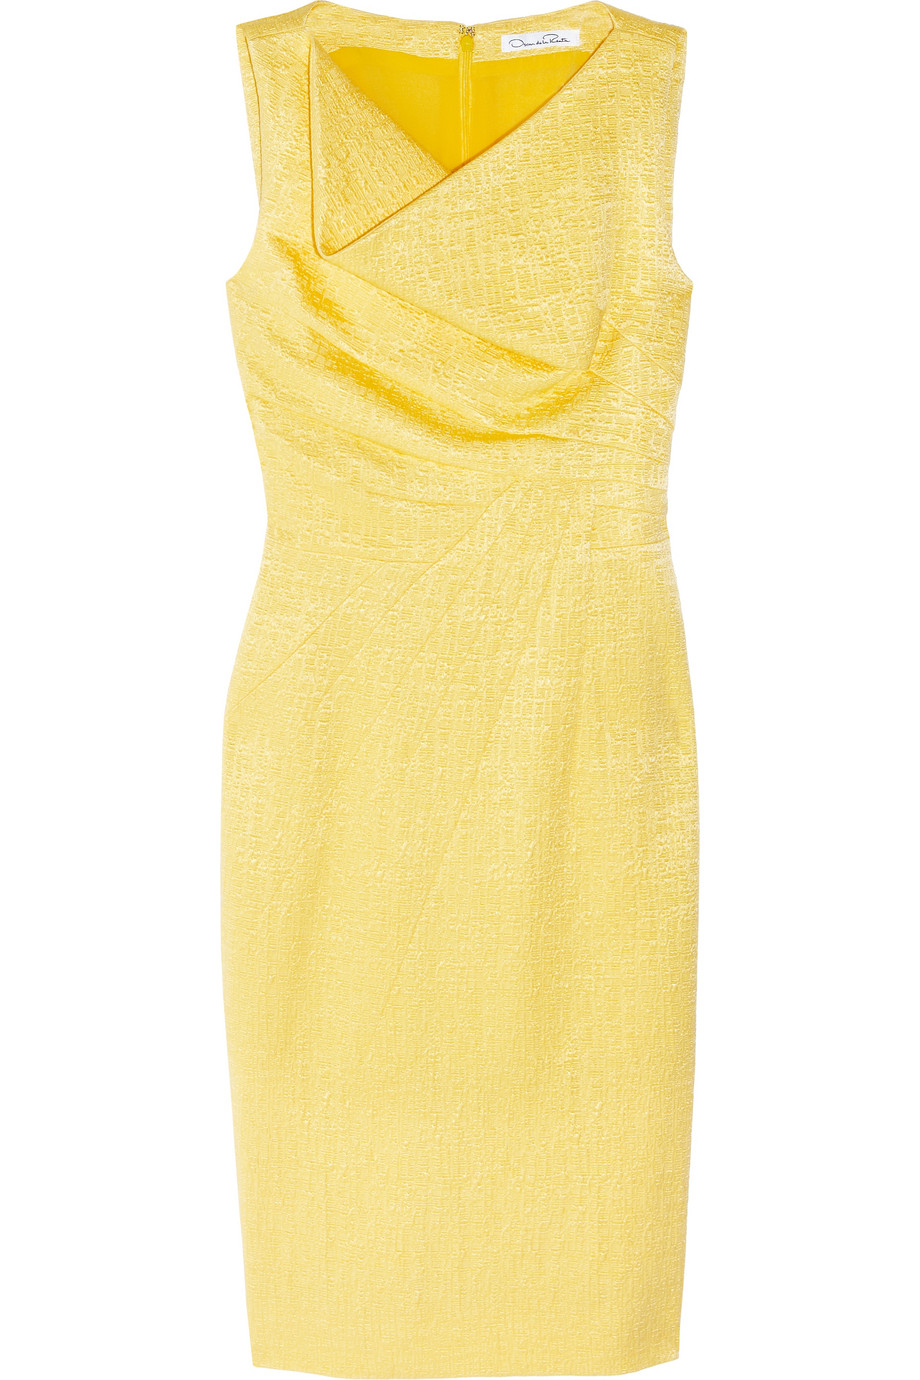 Oscar de la renta Cotton And Silk-Blend Brocade Dress in Yellow | Lyst